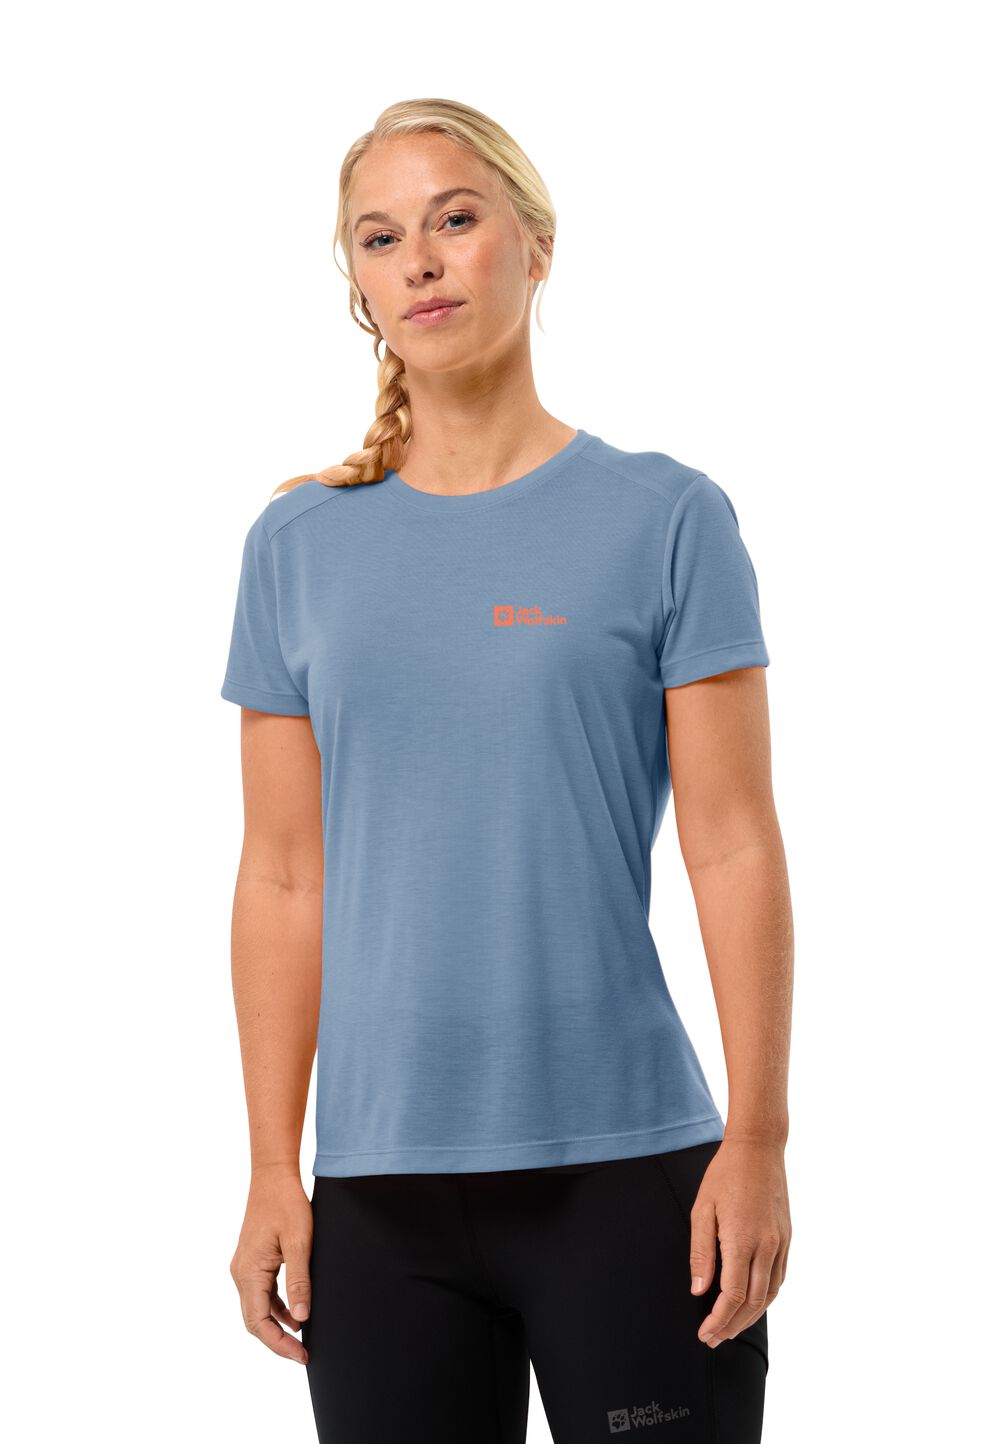 Jack Wolfskin Vonnan S S T-Shirt Women Functioneel shirt Dames S elemental blue elemental blue